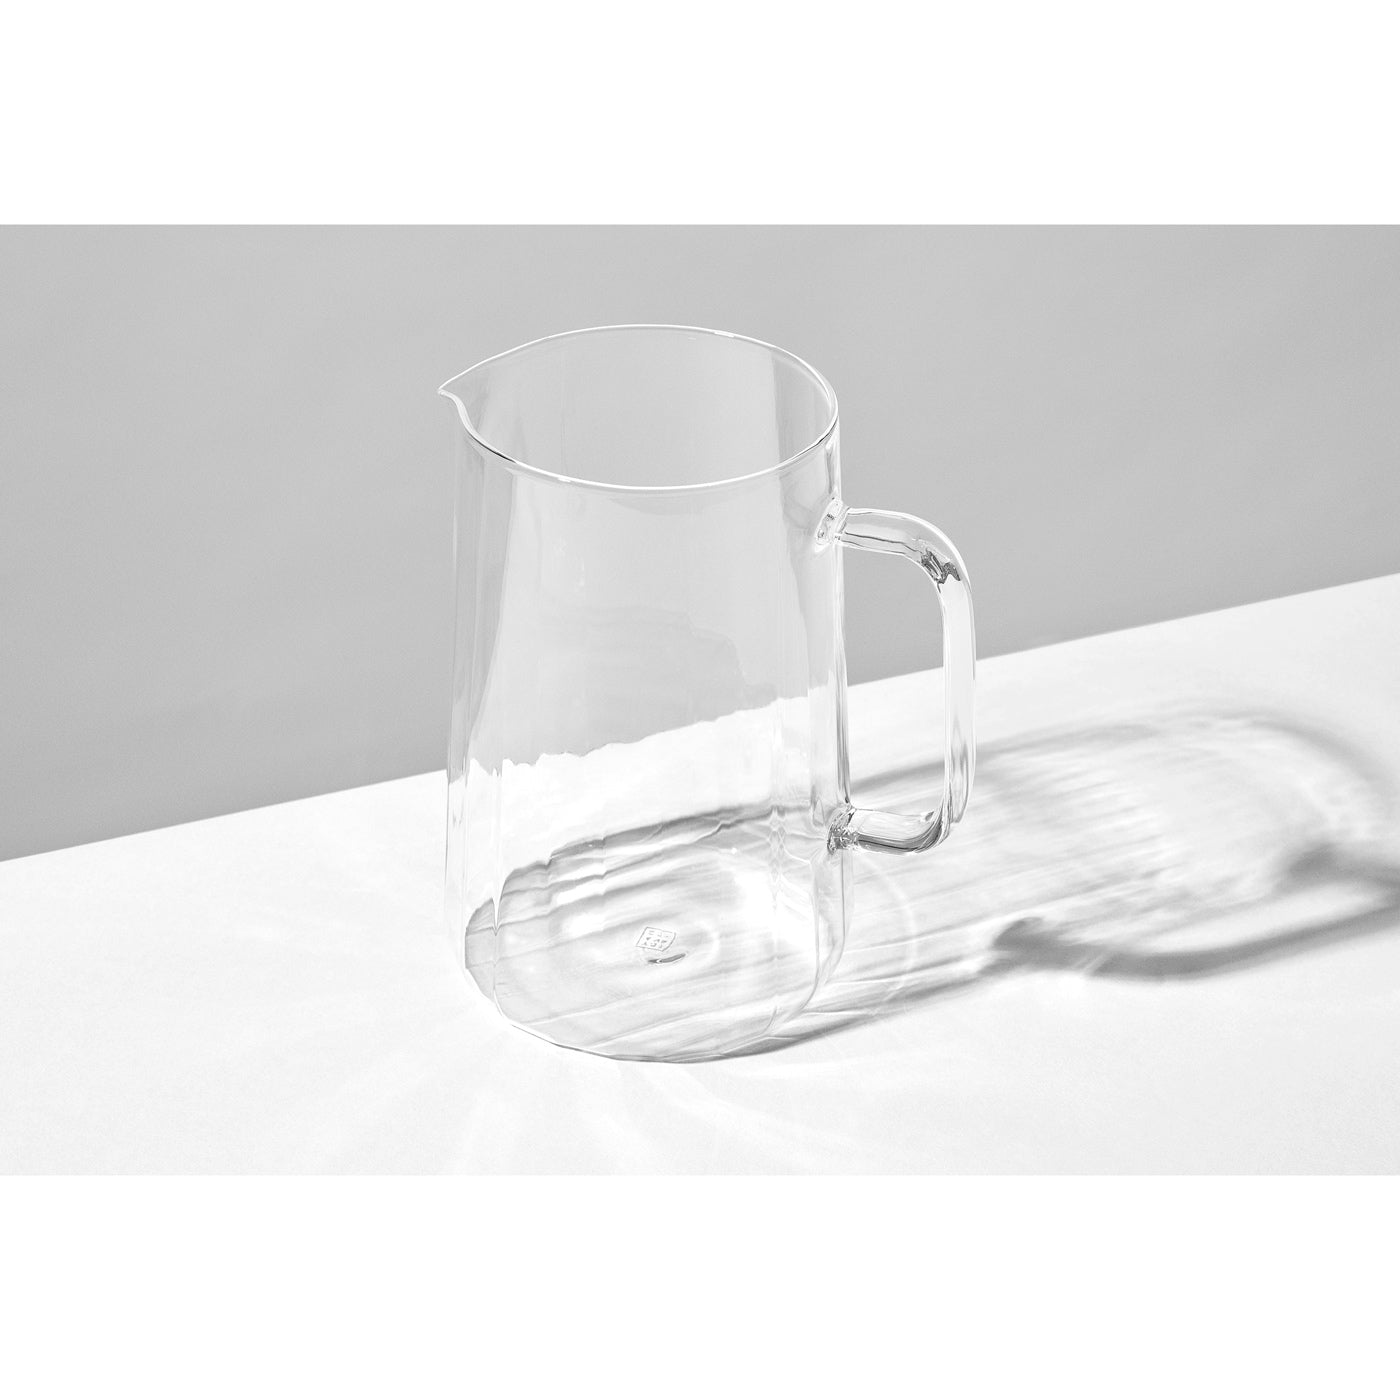 Yod and Co Rivington glass jug design by Blond design studio